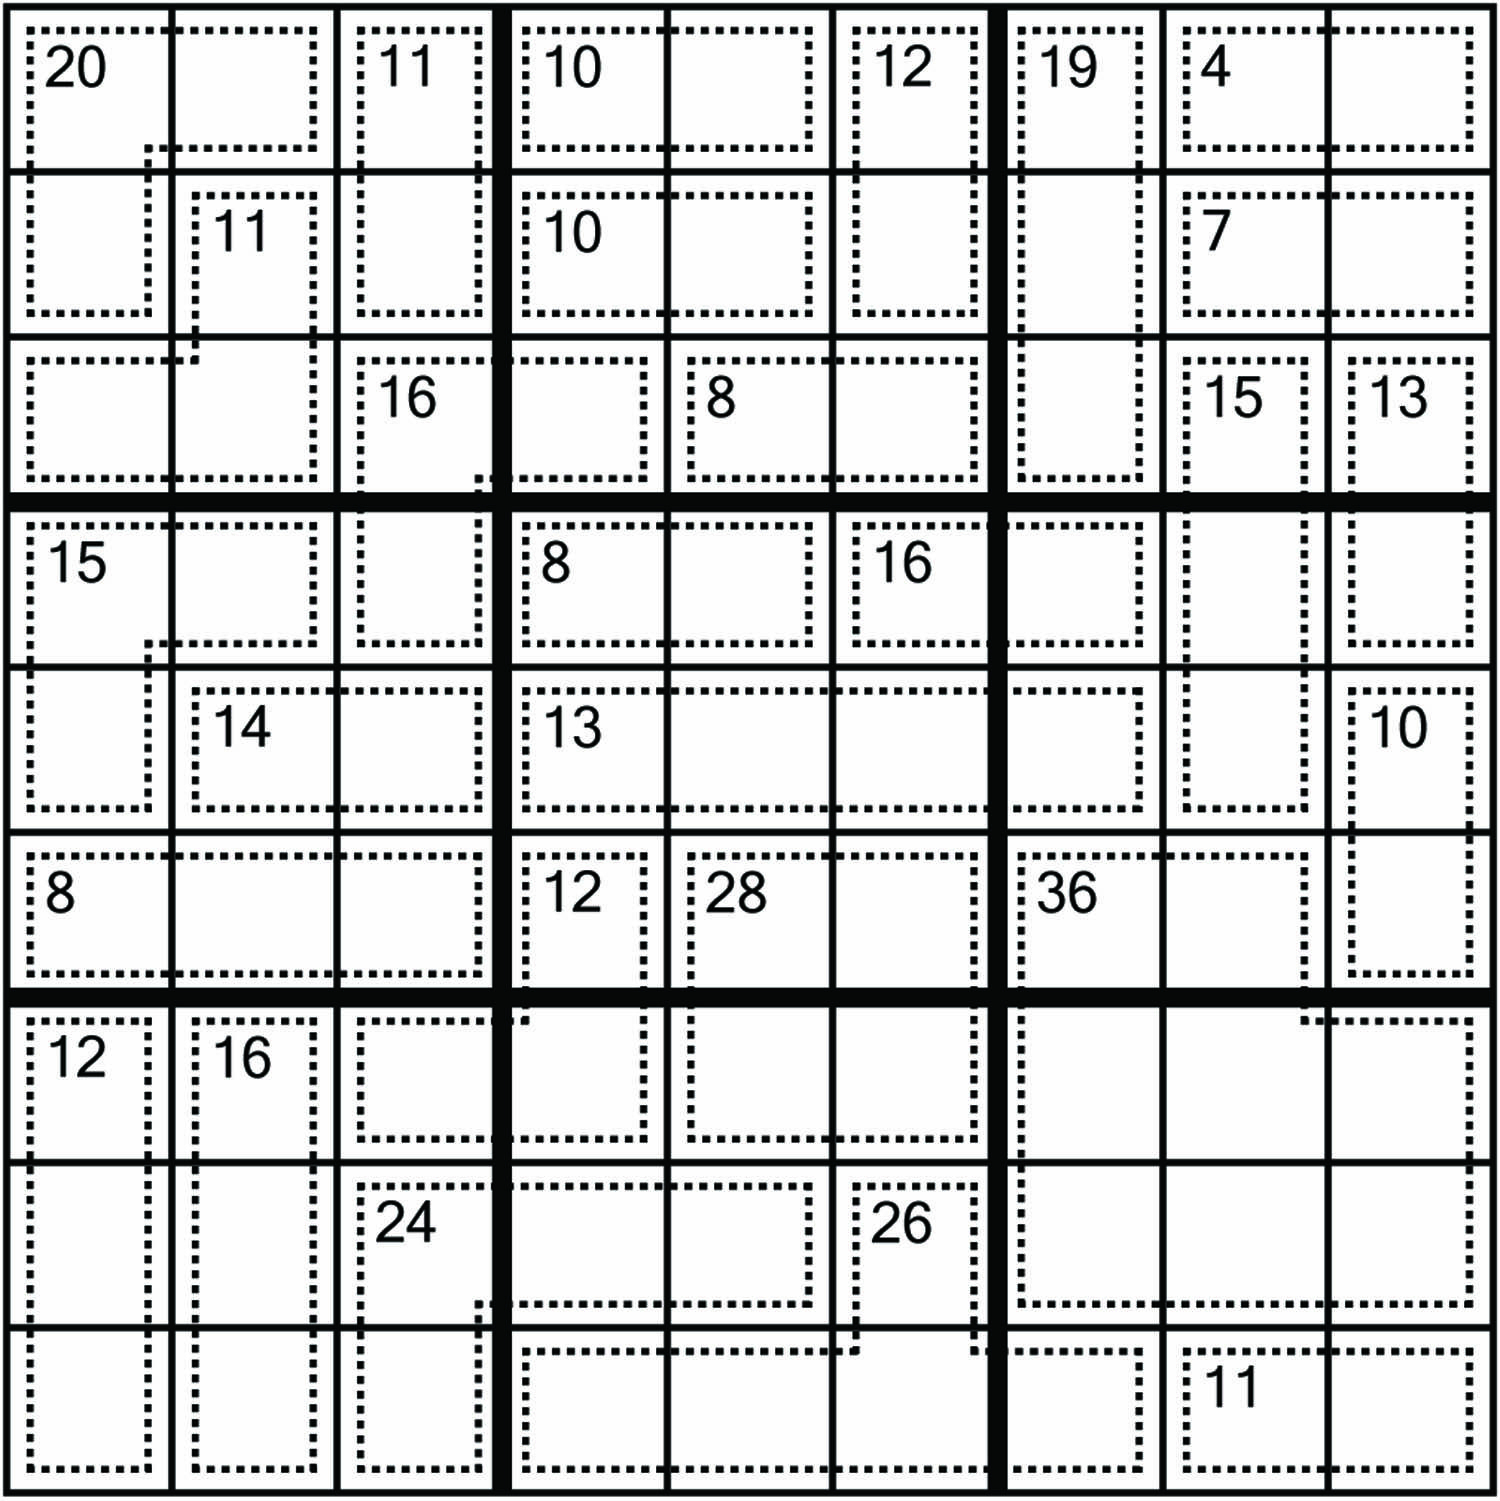 Killer Sudoku Printable Krazydad